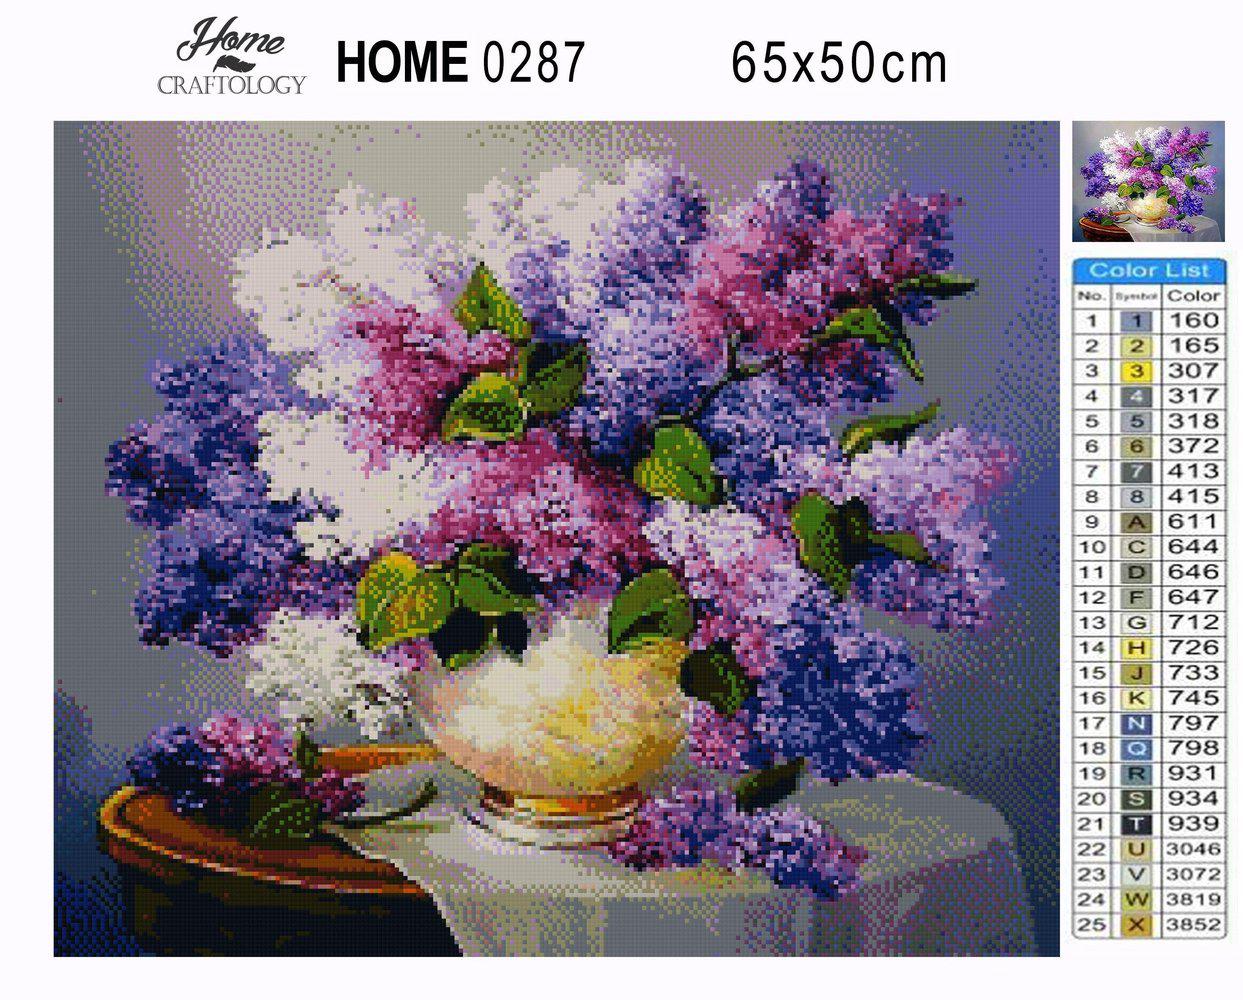 Purple Flowers - Premium Diamond Painting Kit – Home Craftology